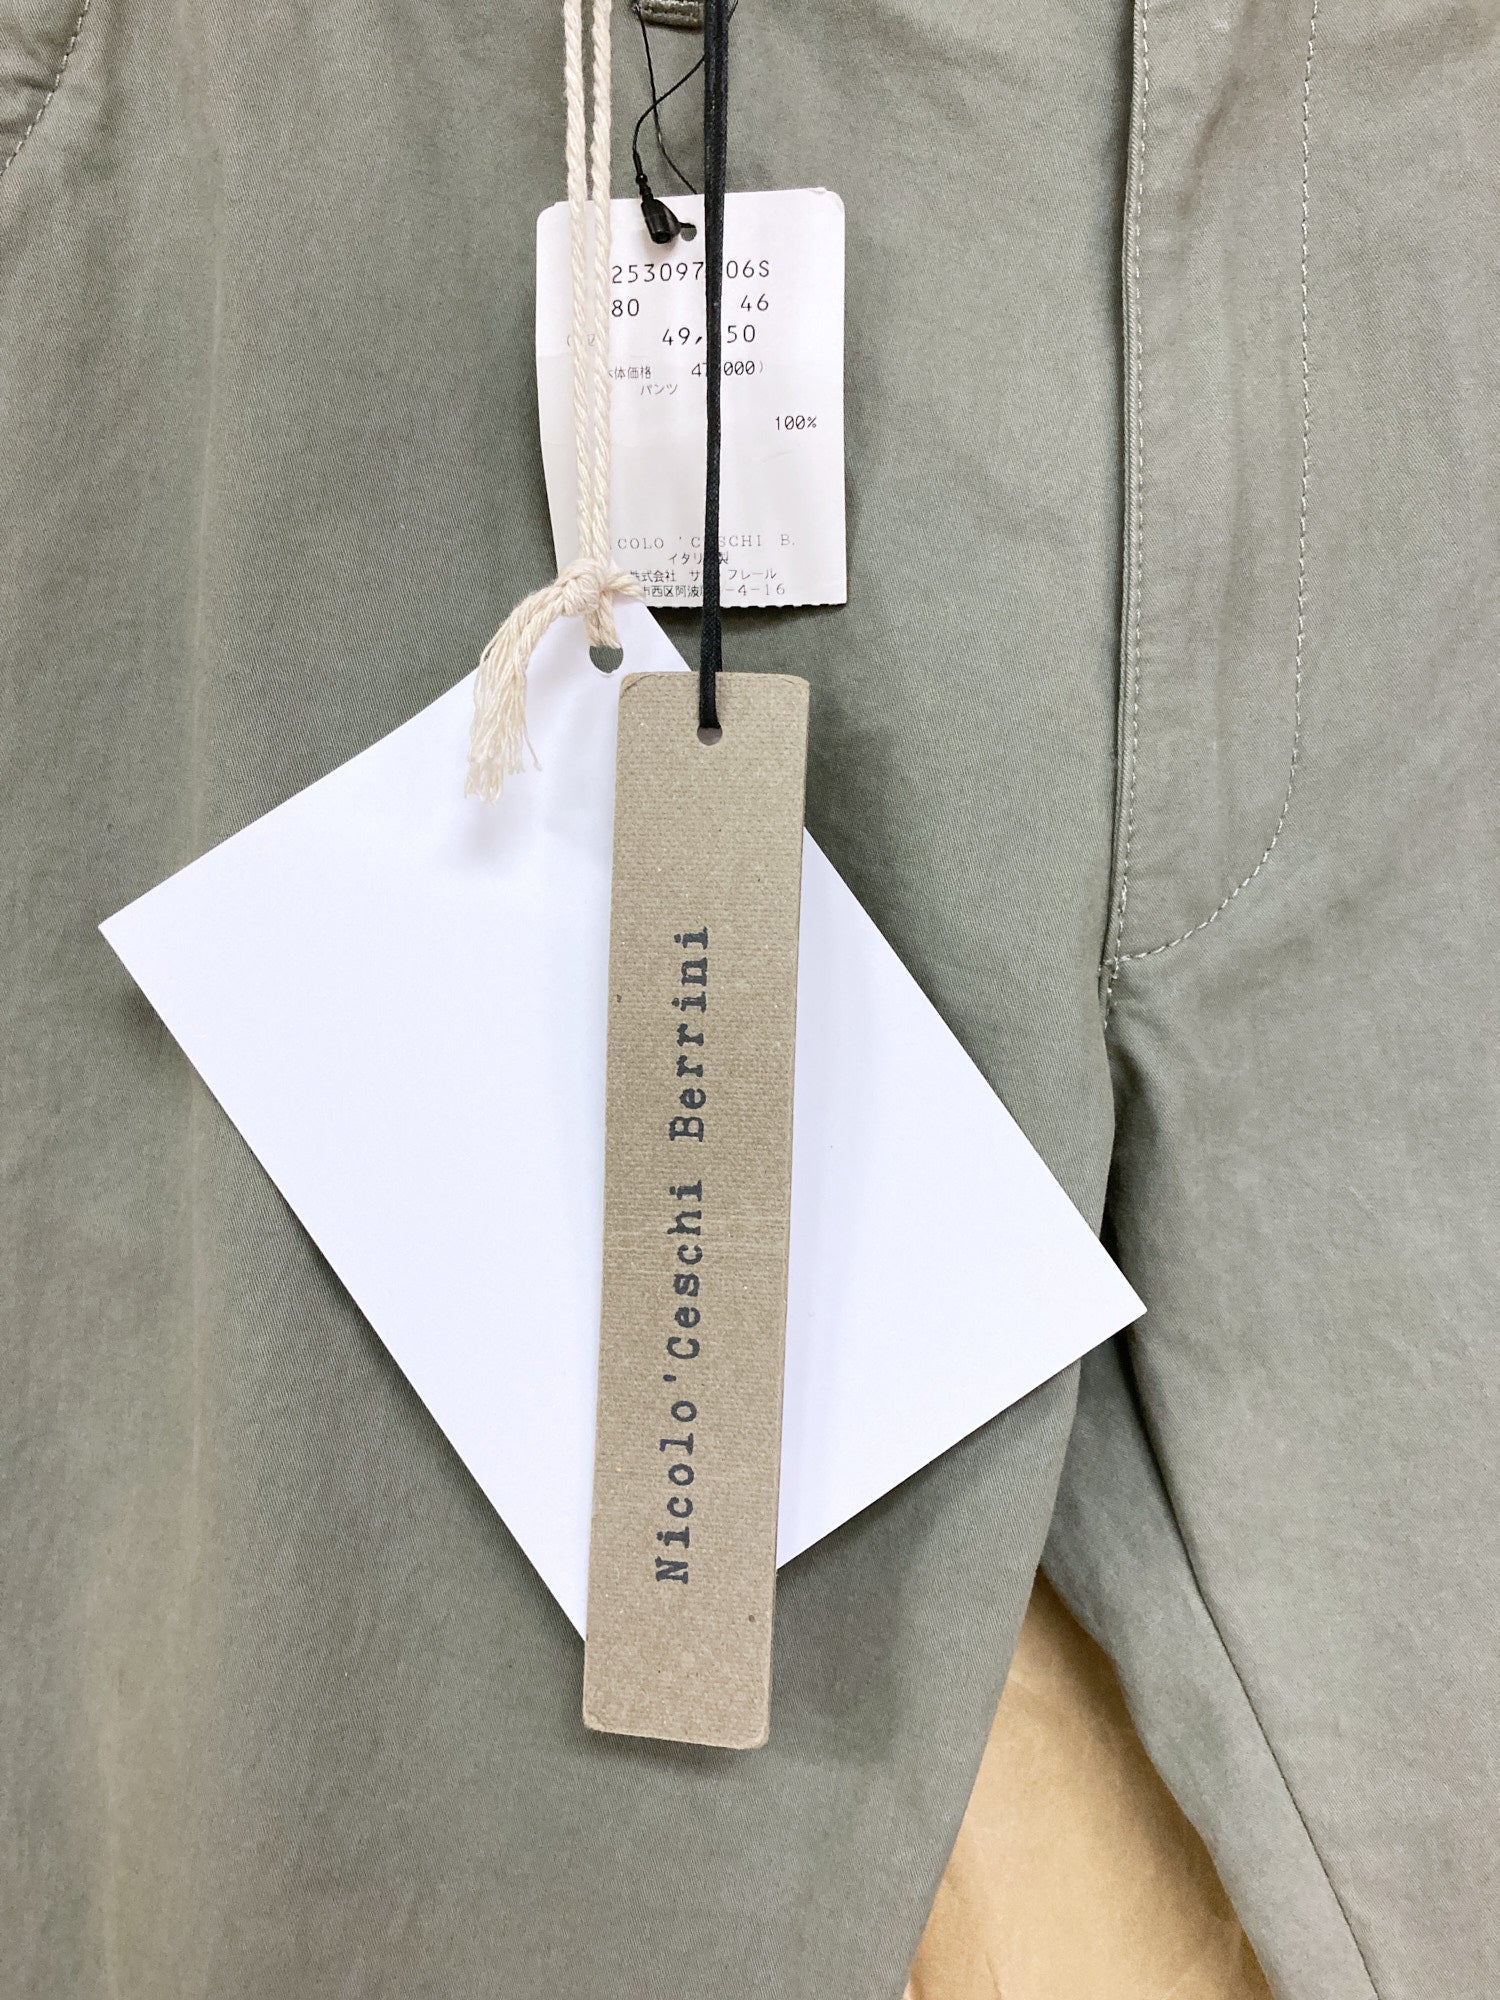 Nicolo Ceschi Berrini khaki grey cotton articulated knee trousers - sz 46 sample